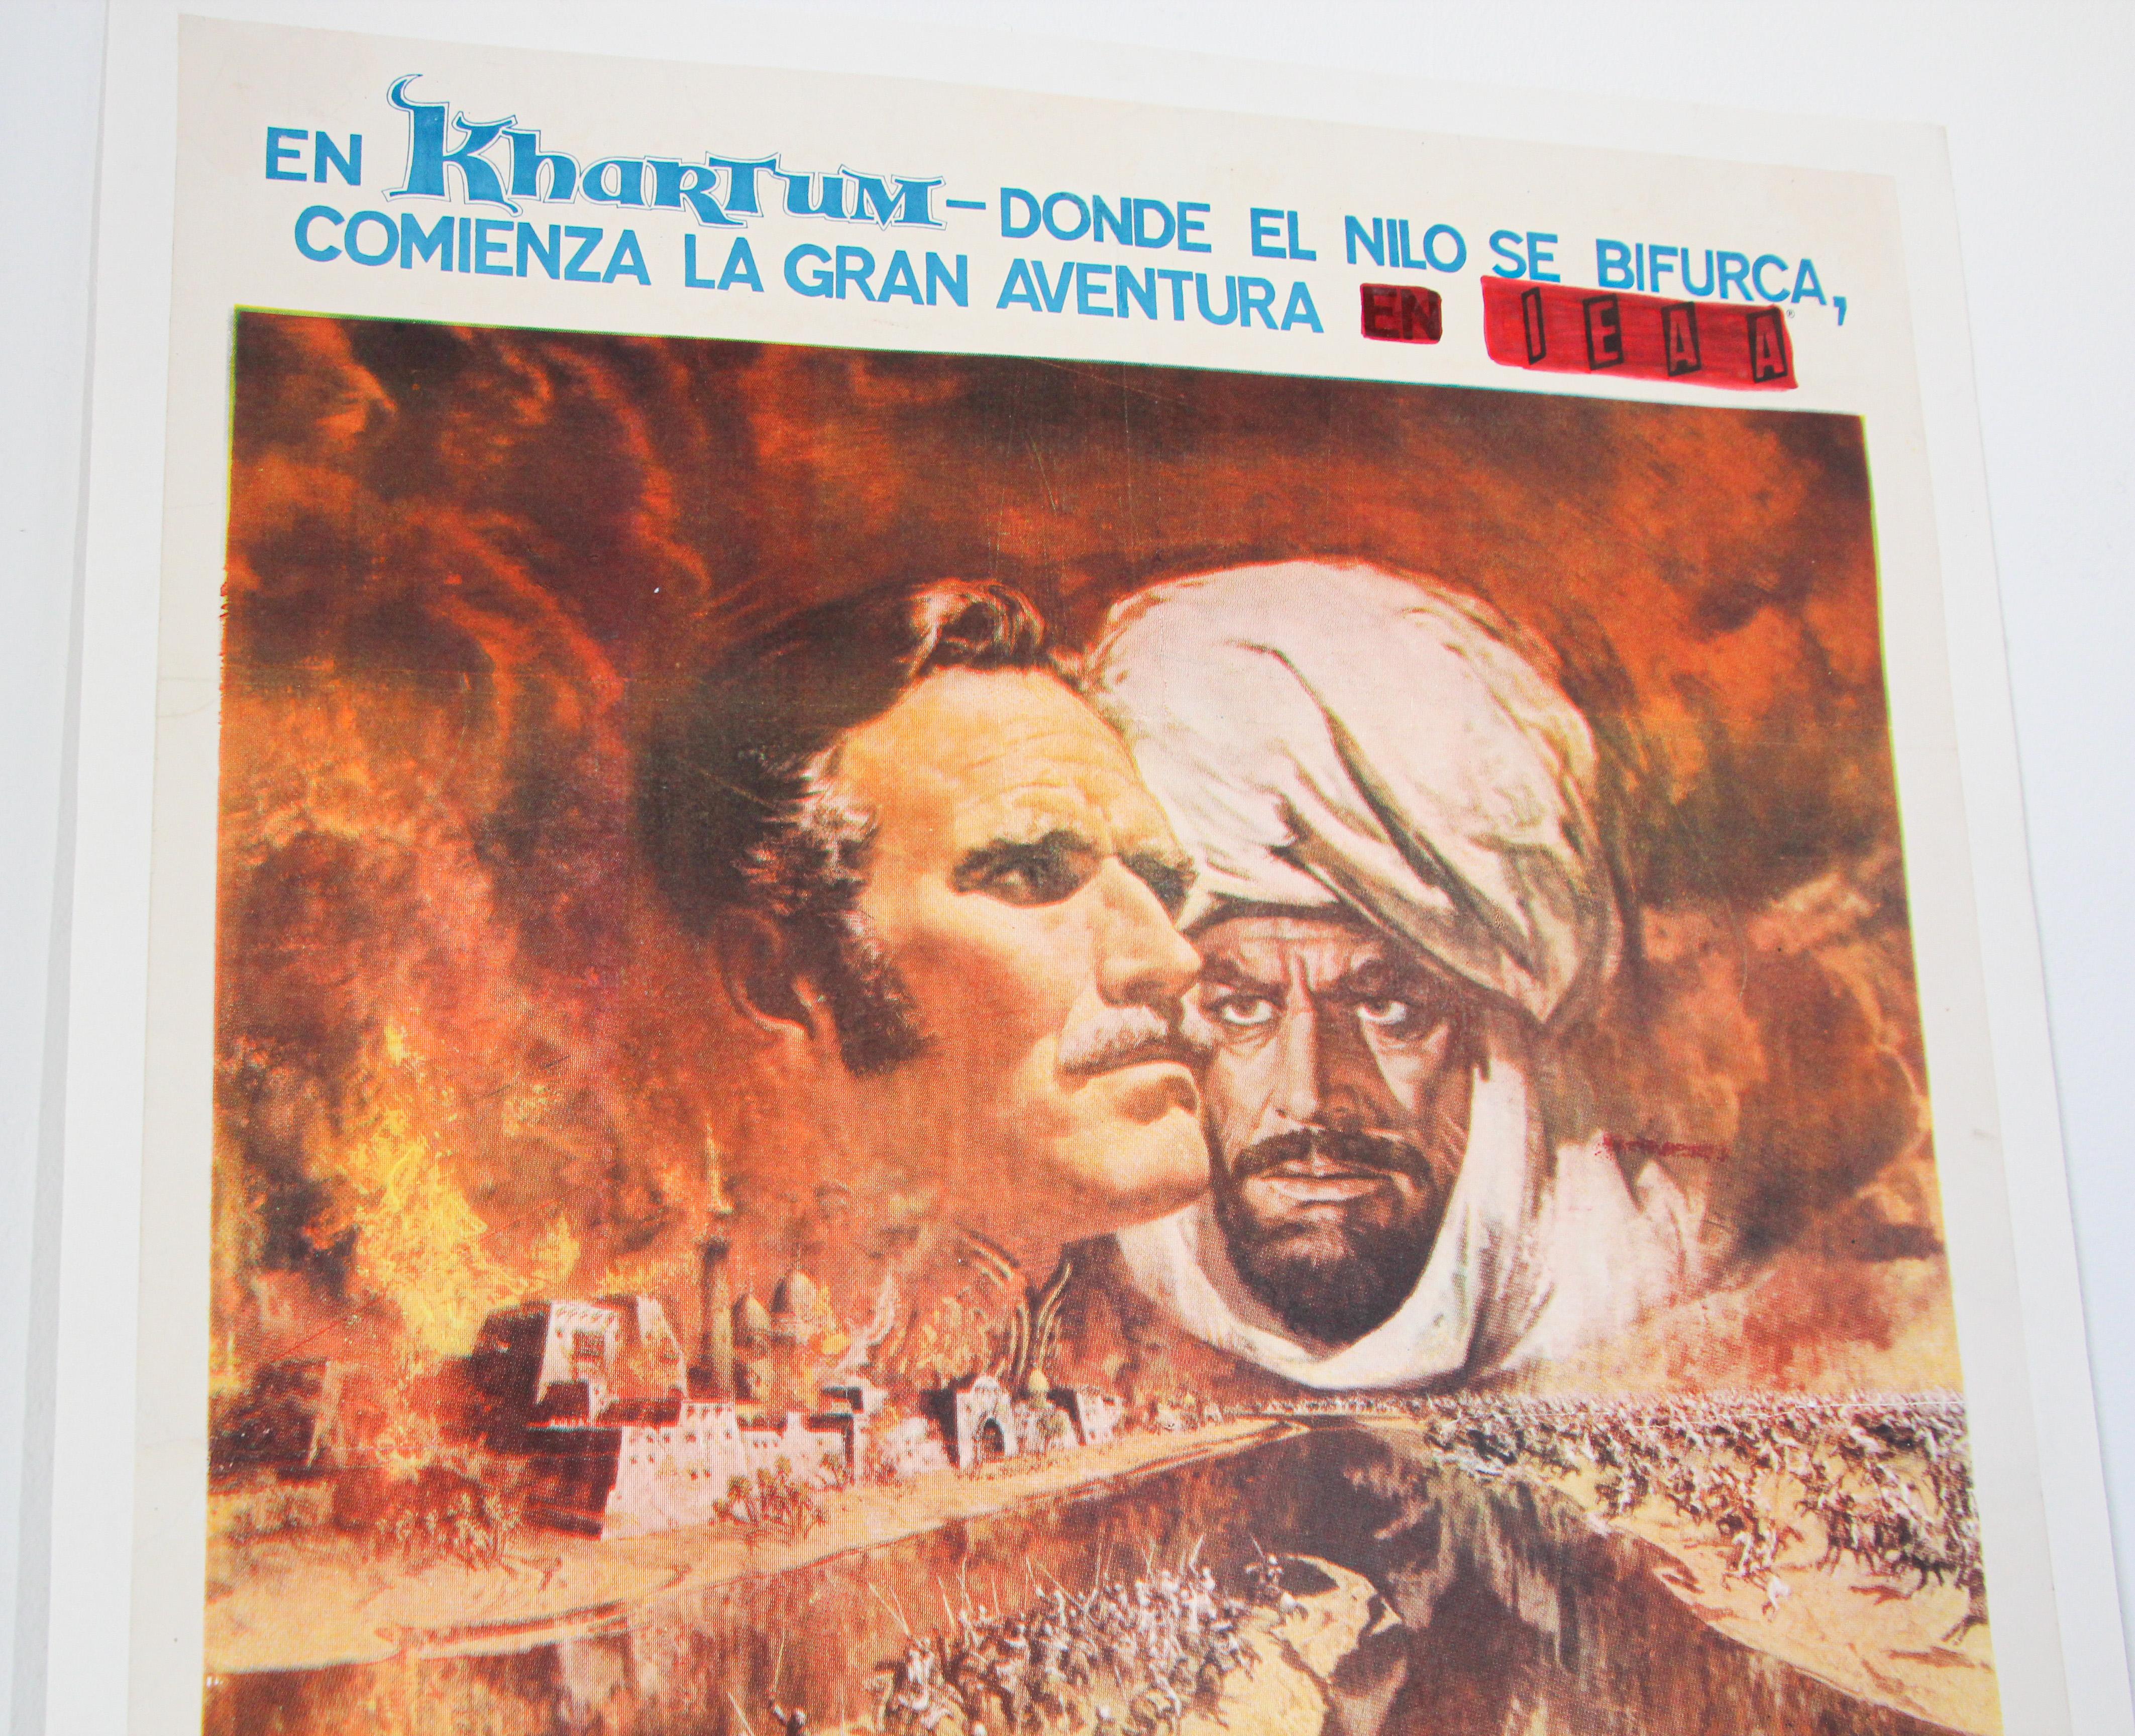 khartoum 1966 full movie